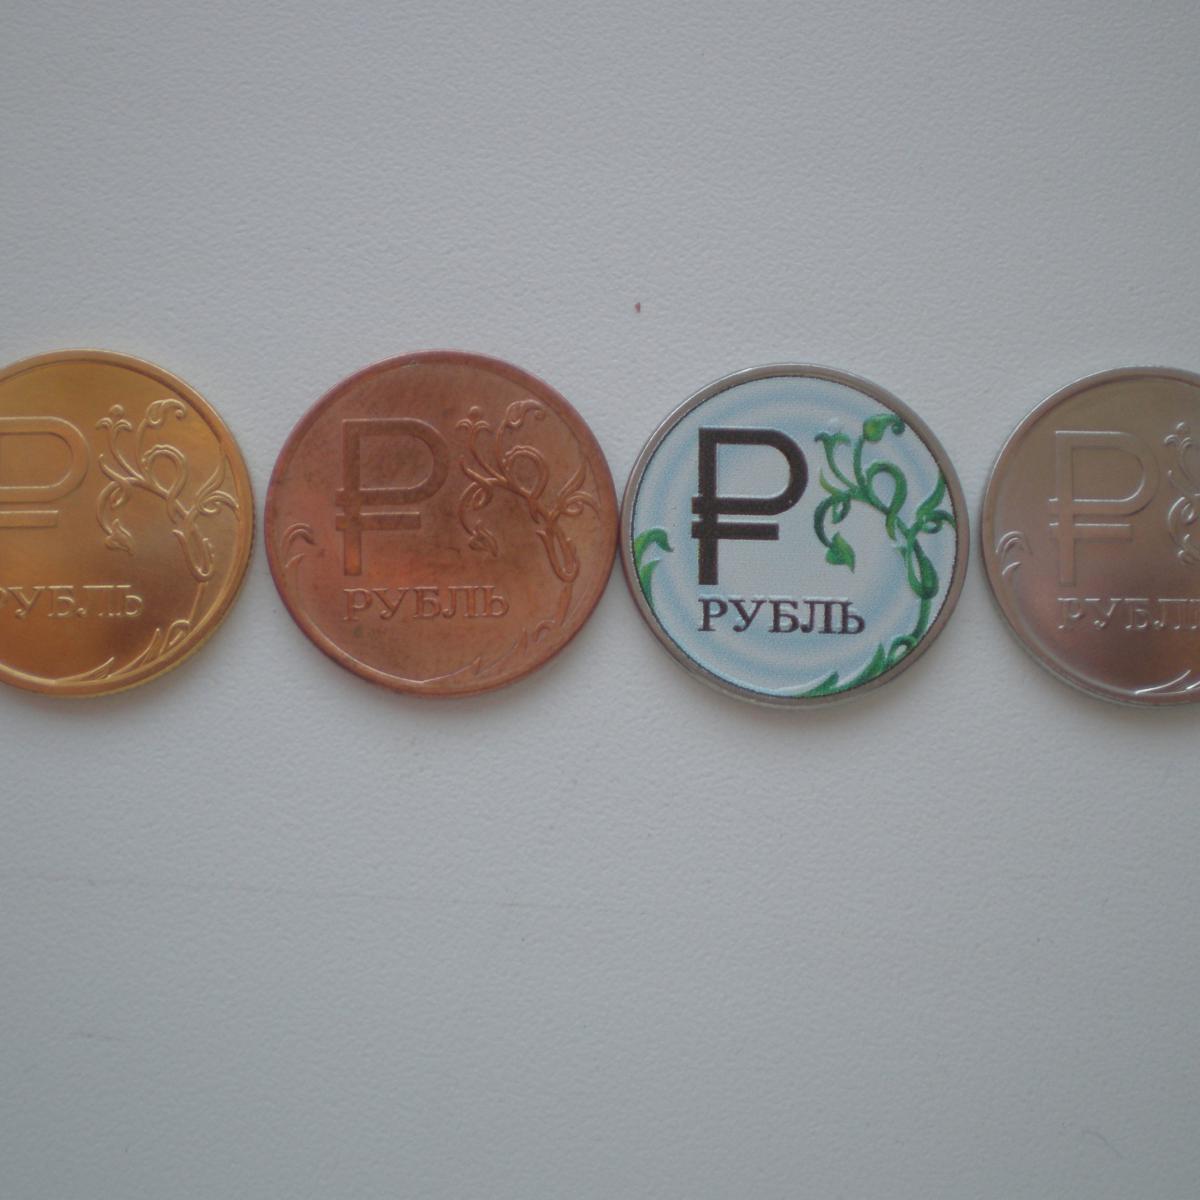 Рублей без 1 рубля. Монета рубль 2014 года. Монета с буквой р. 1 Рубль 2014. Монета 1 рубль 2014 года.